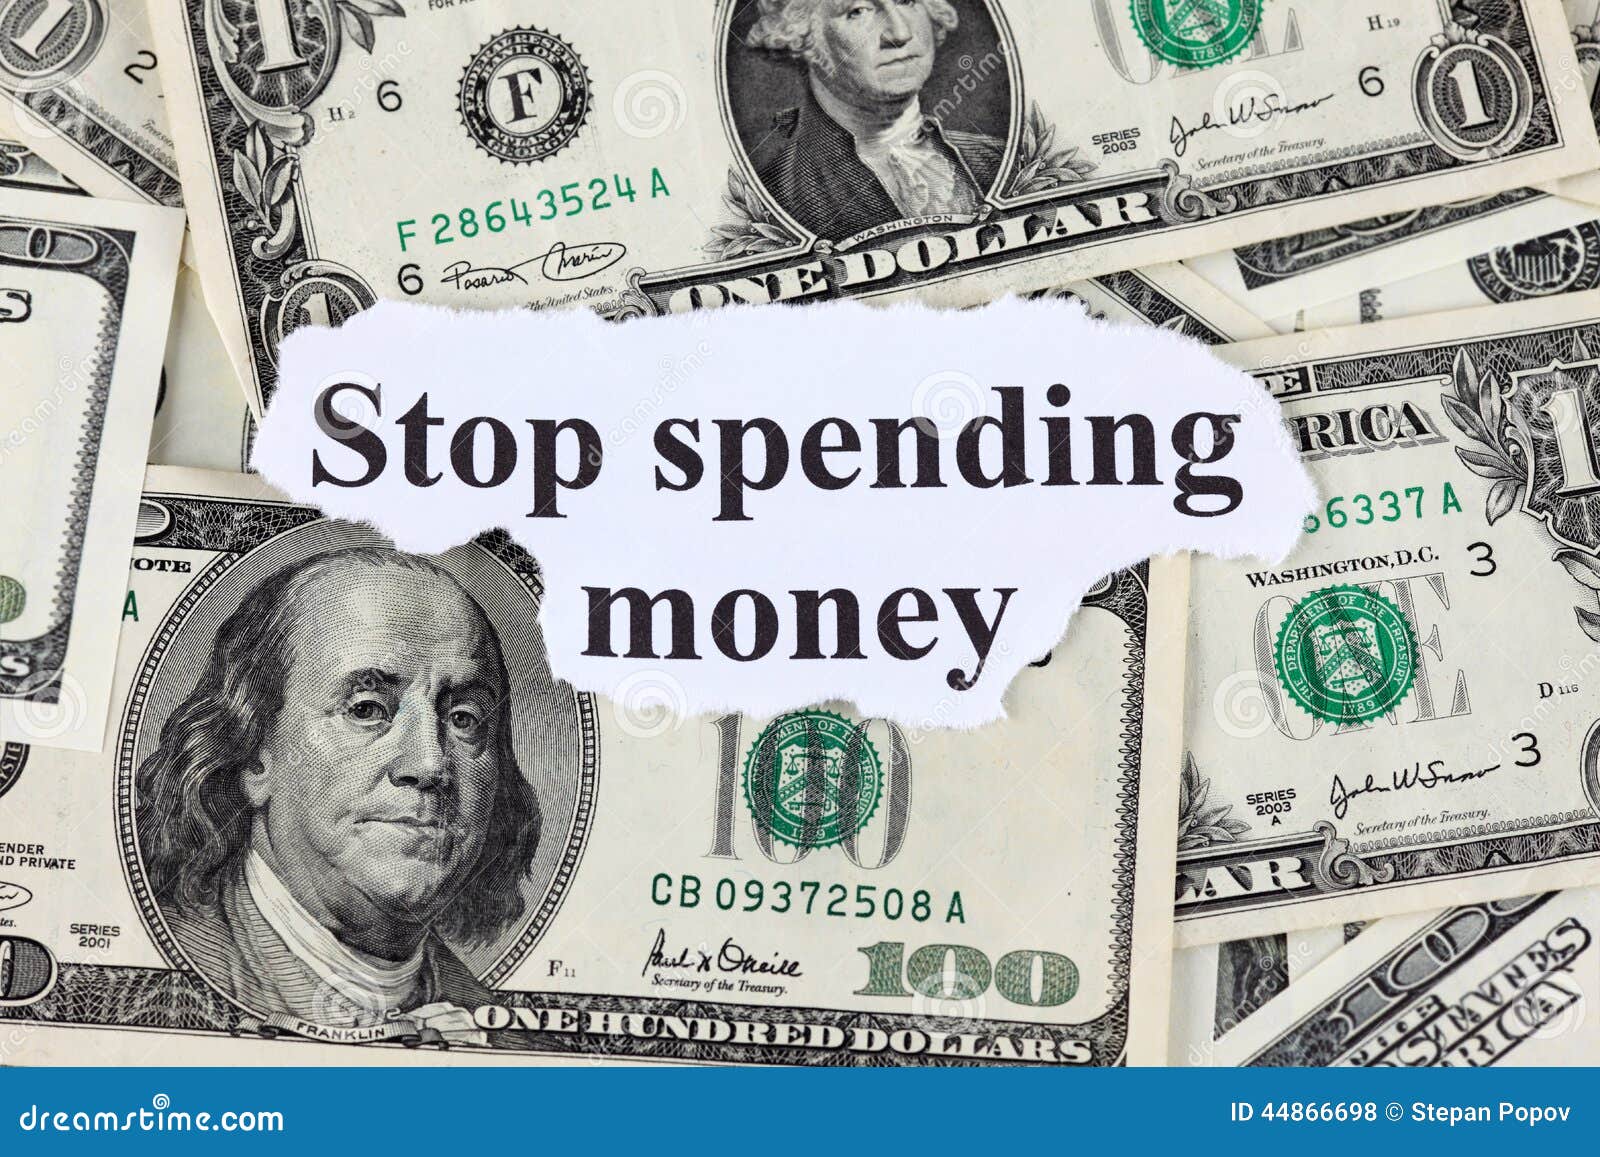 Вашингтон деньги. Stop spending money. Stop spending money illustration. 21 Ways to stop spending money. I like spend money